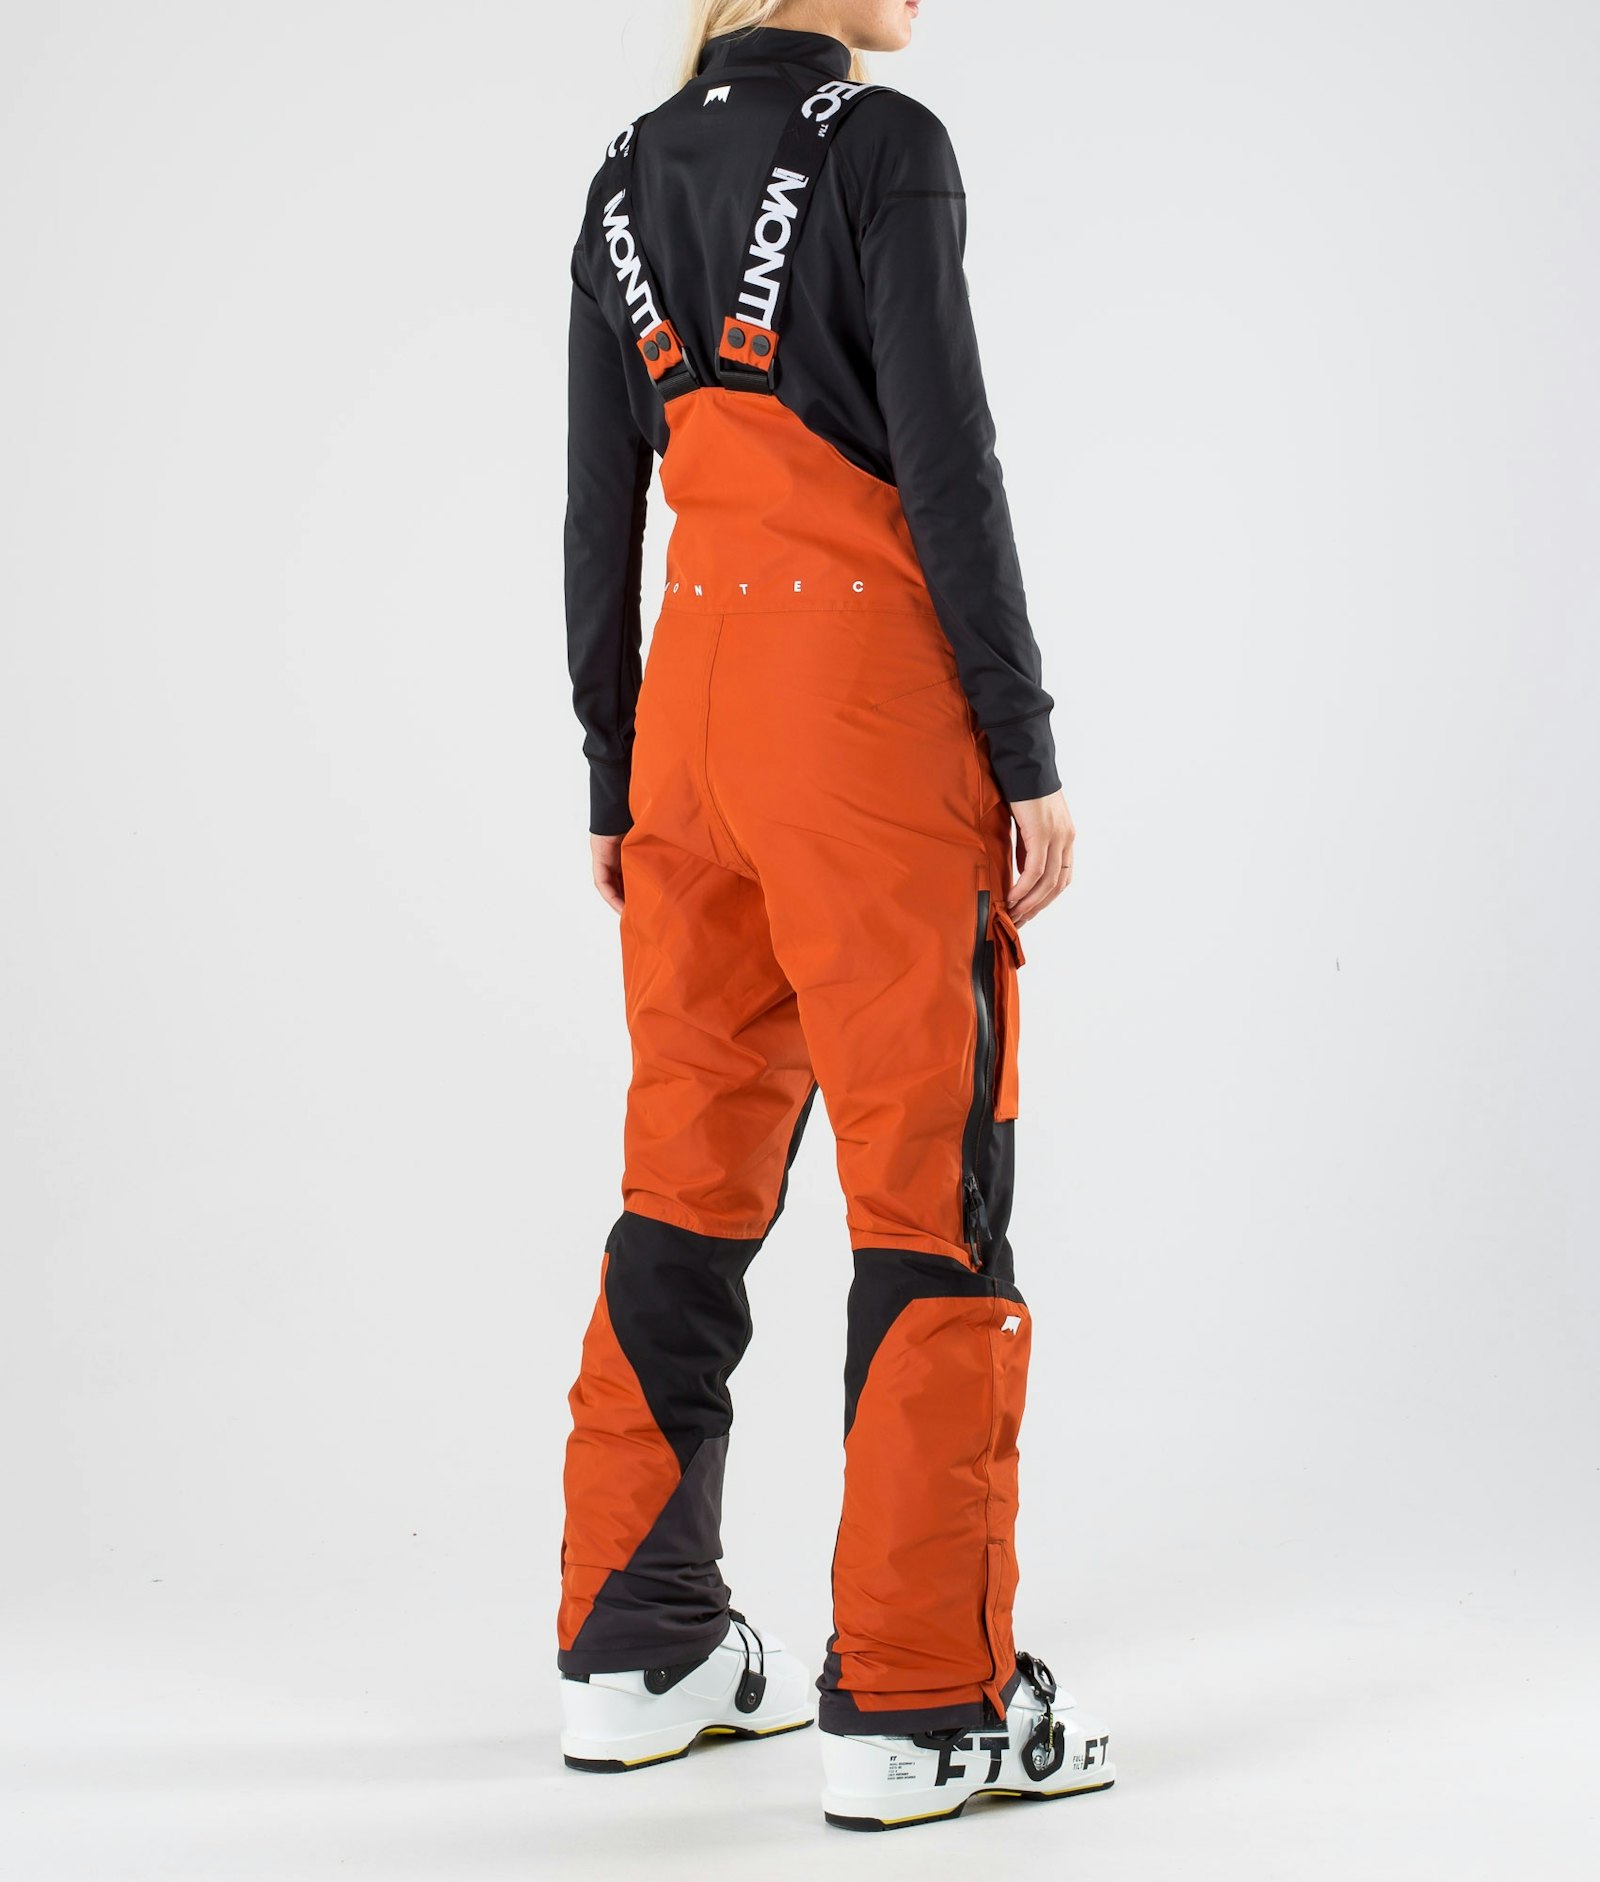 Fawk W 2019 Ski Pants Women Clay/Black Renewed, Image 2 of 11